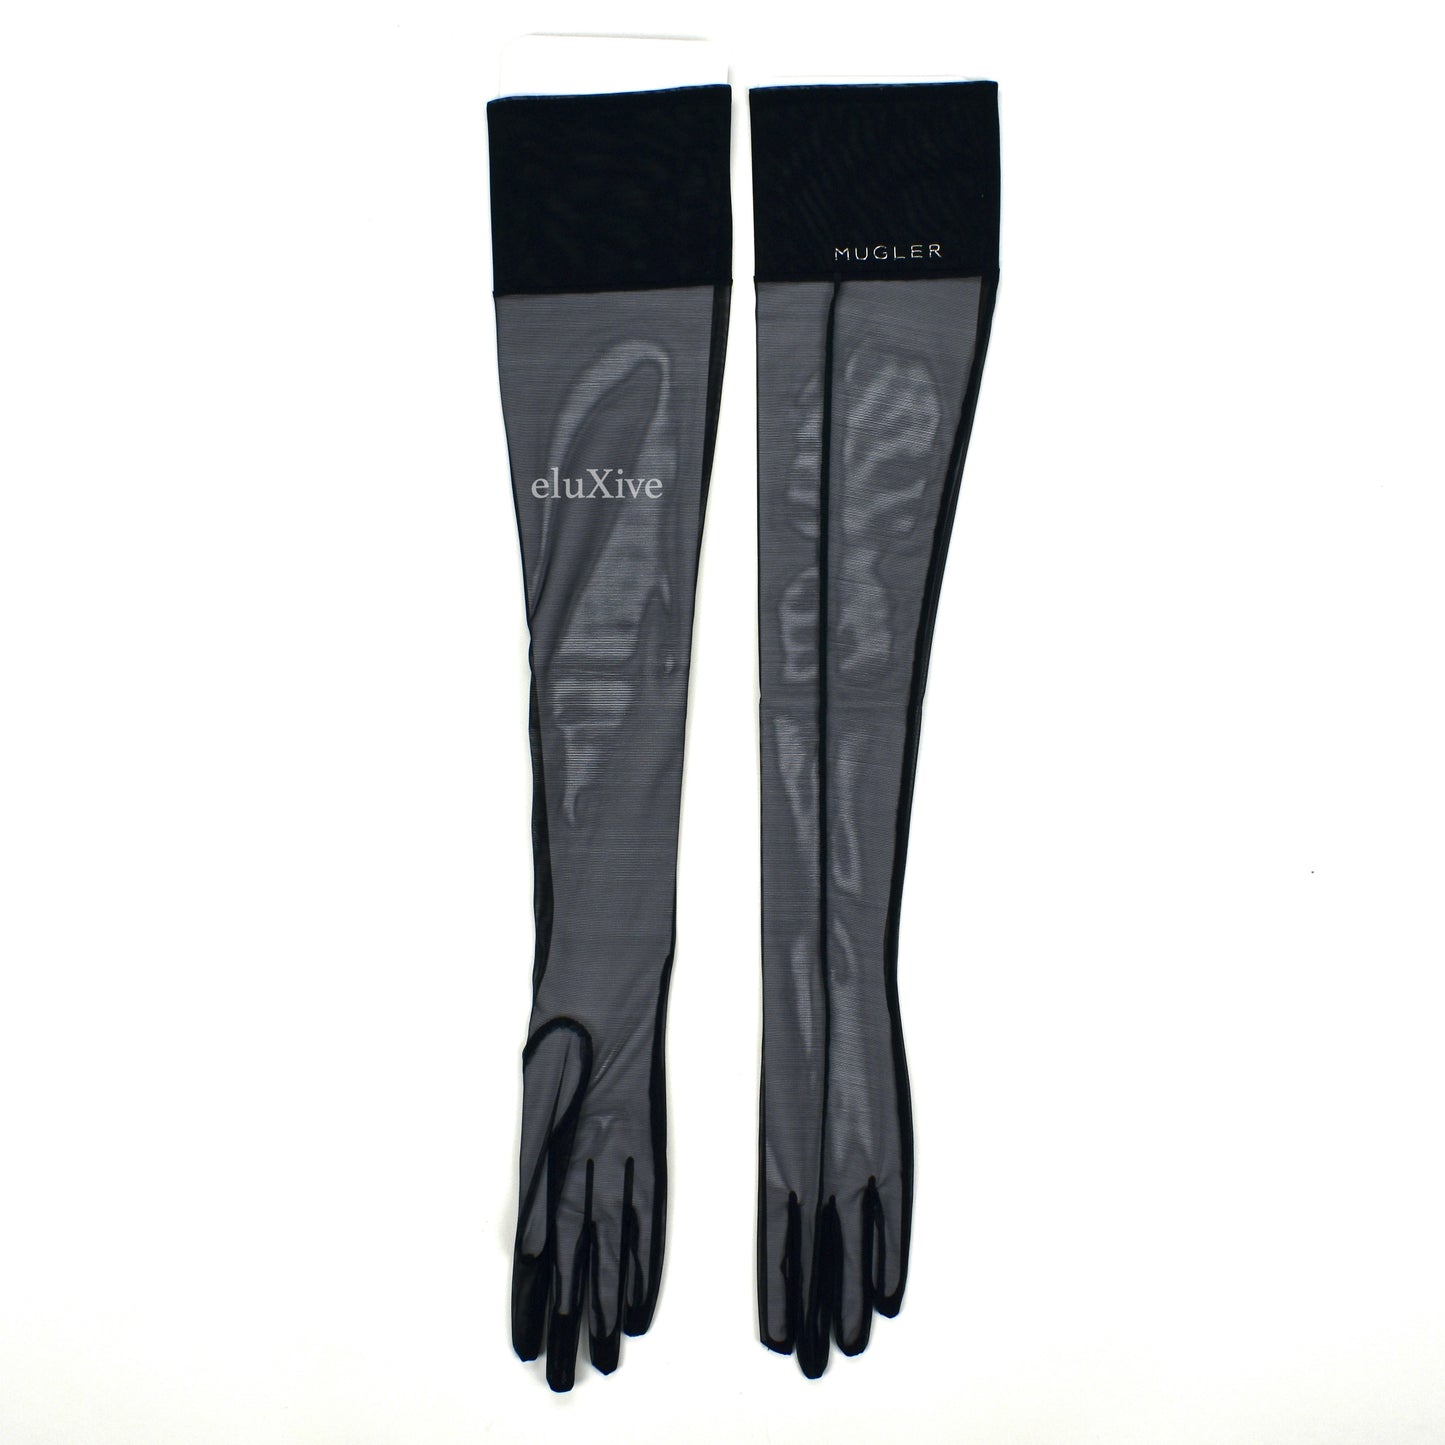 Mugler x H&M - Black Mesh Second Skin Gloves